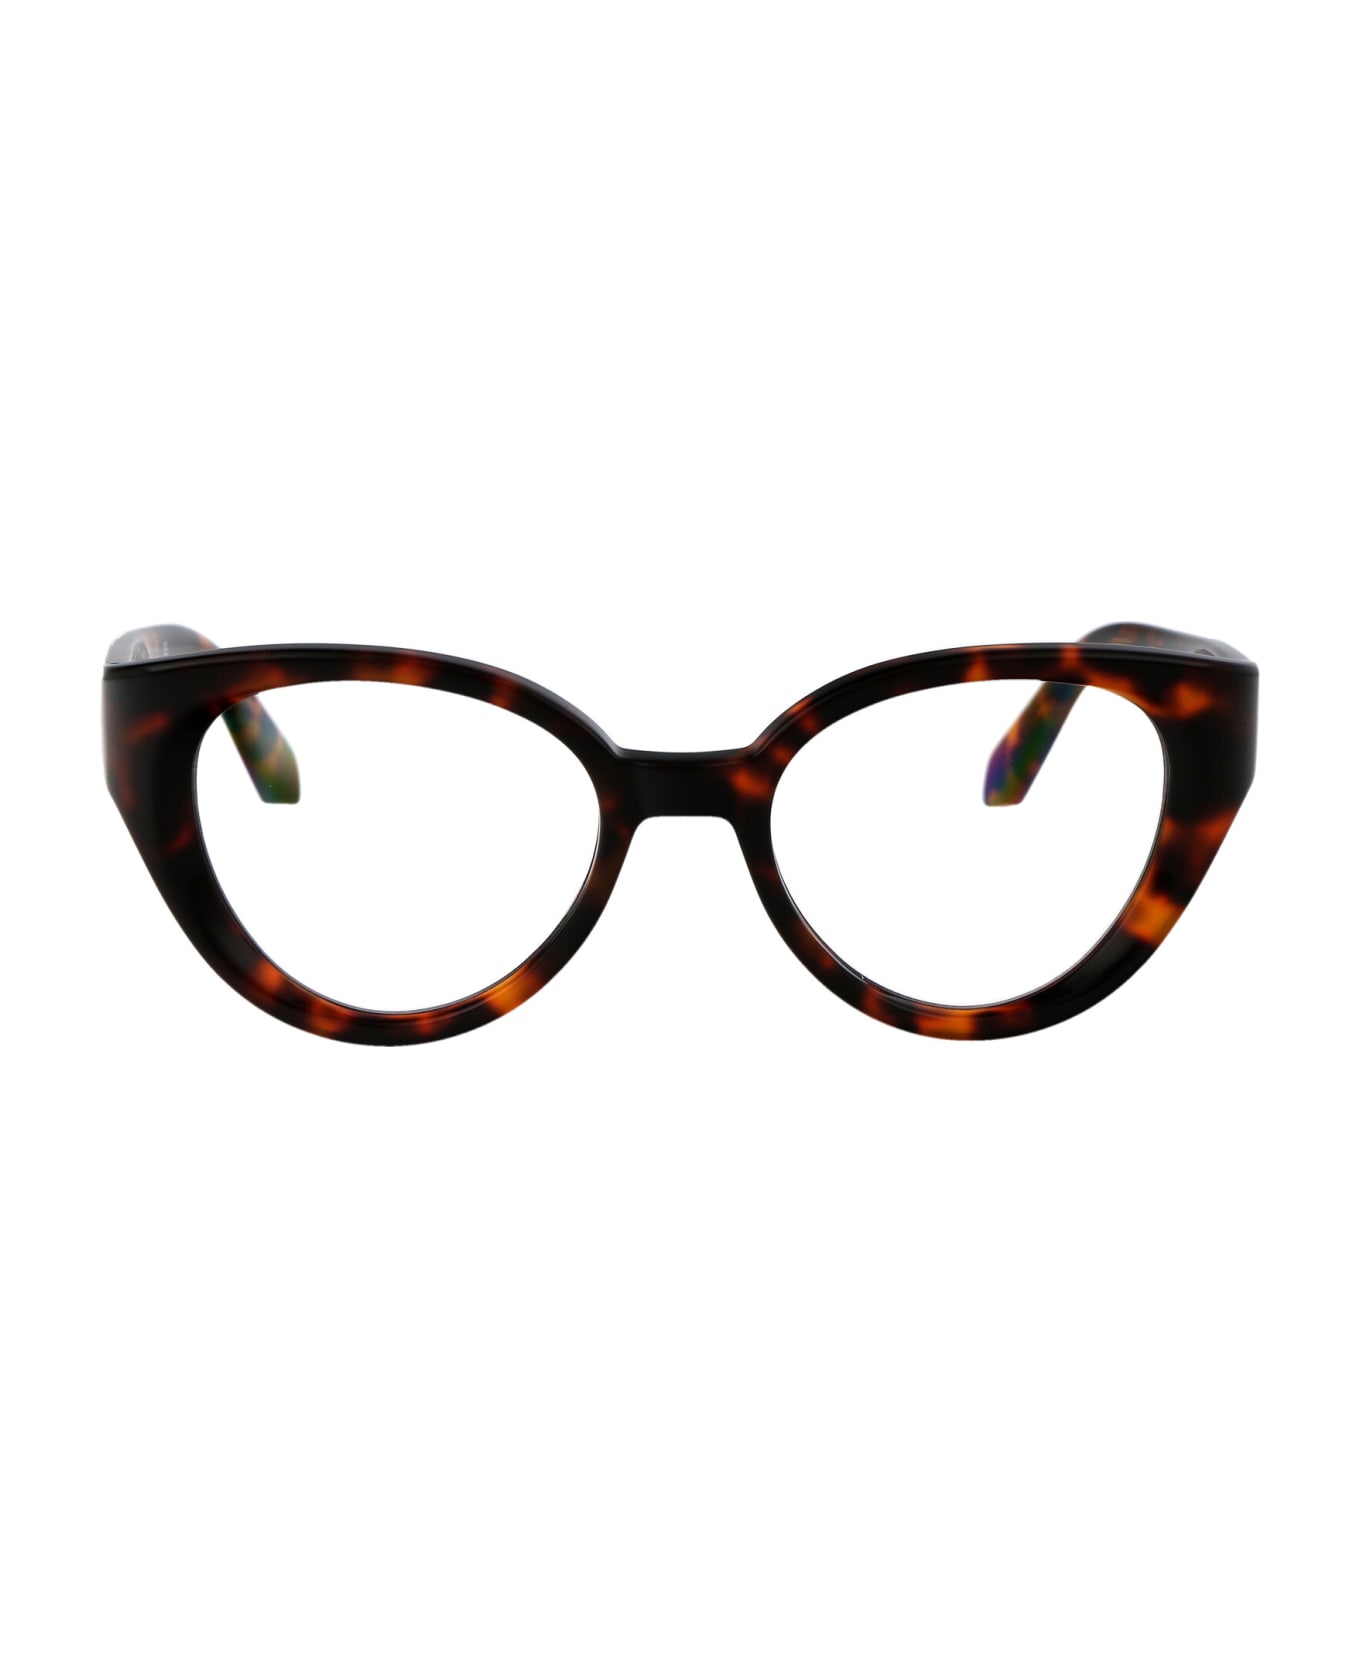 Off-White Optical Style 62 Glasses - 6000 HAVANA